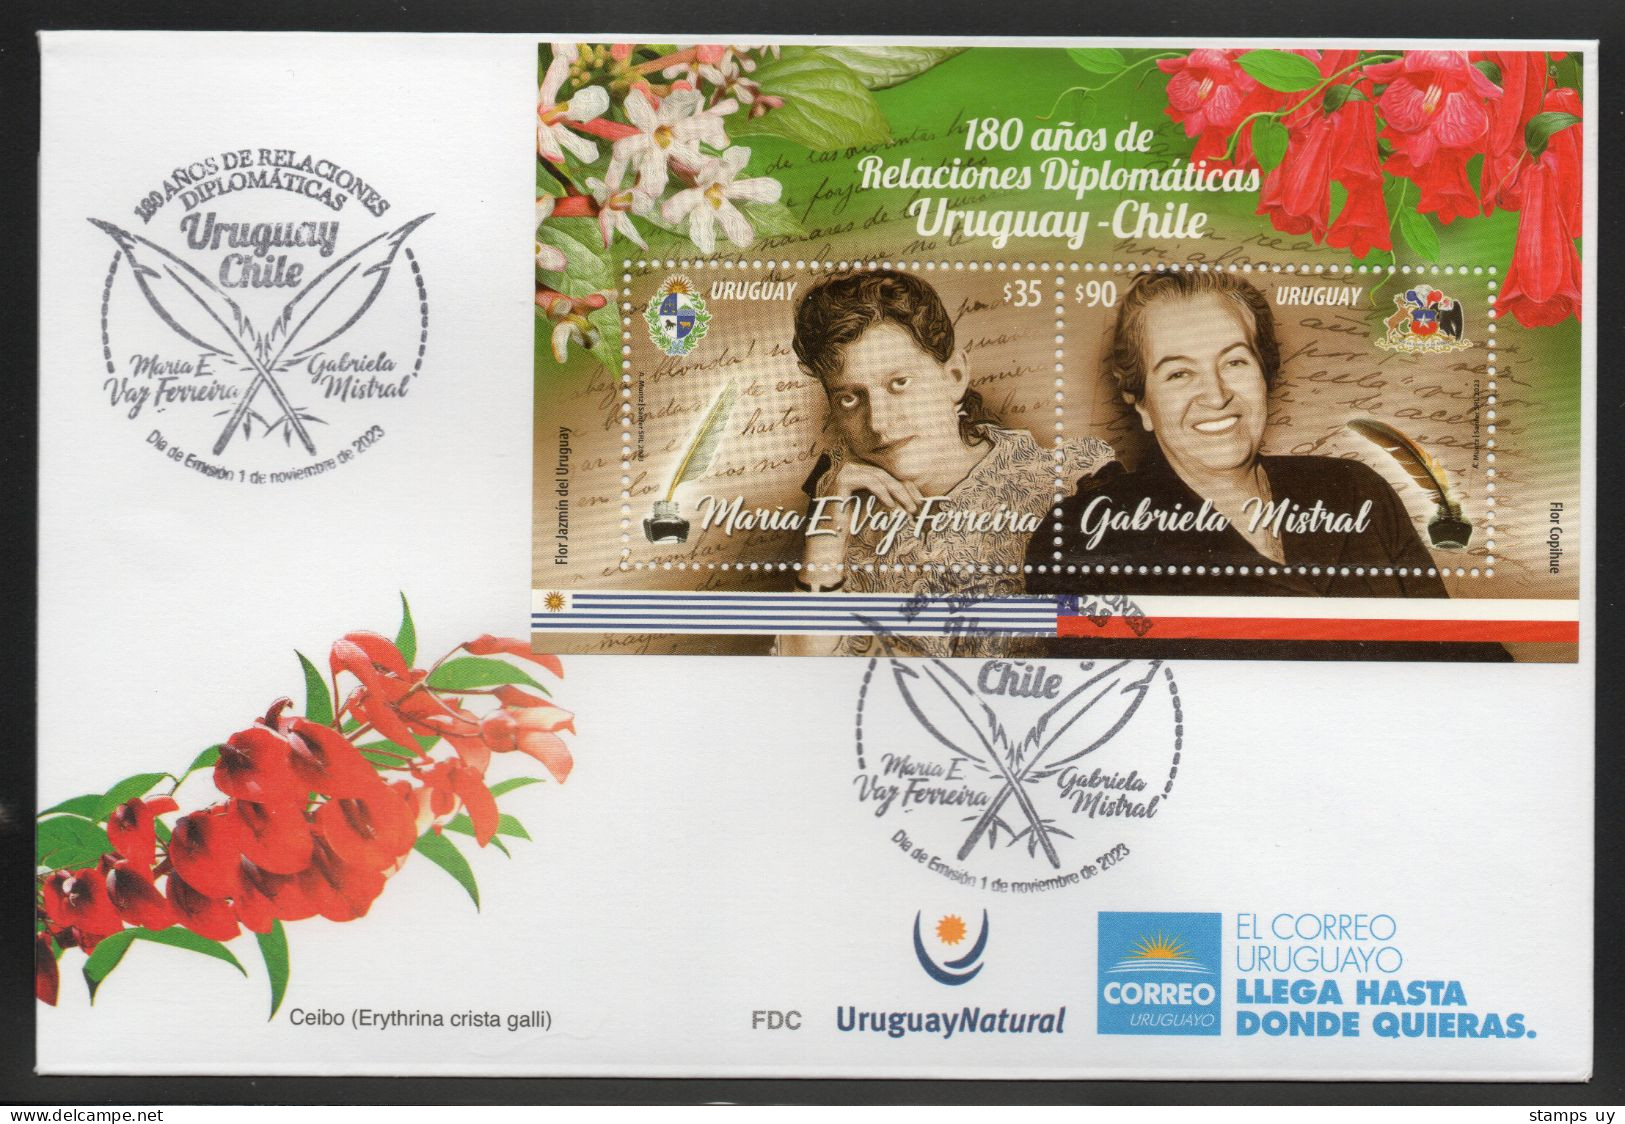 URUGUAY 2023 (Diplomacy, Chile, Poets, M E Vaz Ferreira, Gabriela Mistral, Nobel Prize, Literature, Flowers) - 1 FDC - Stamps